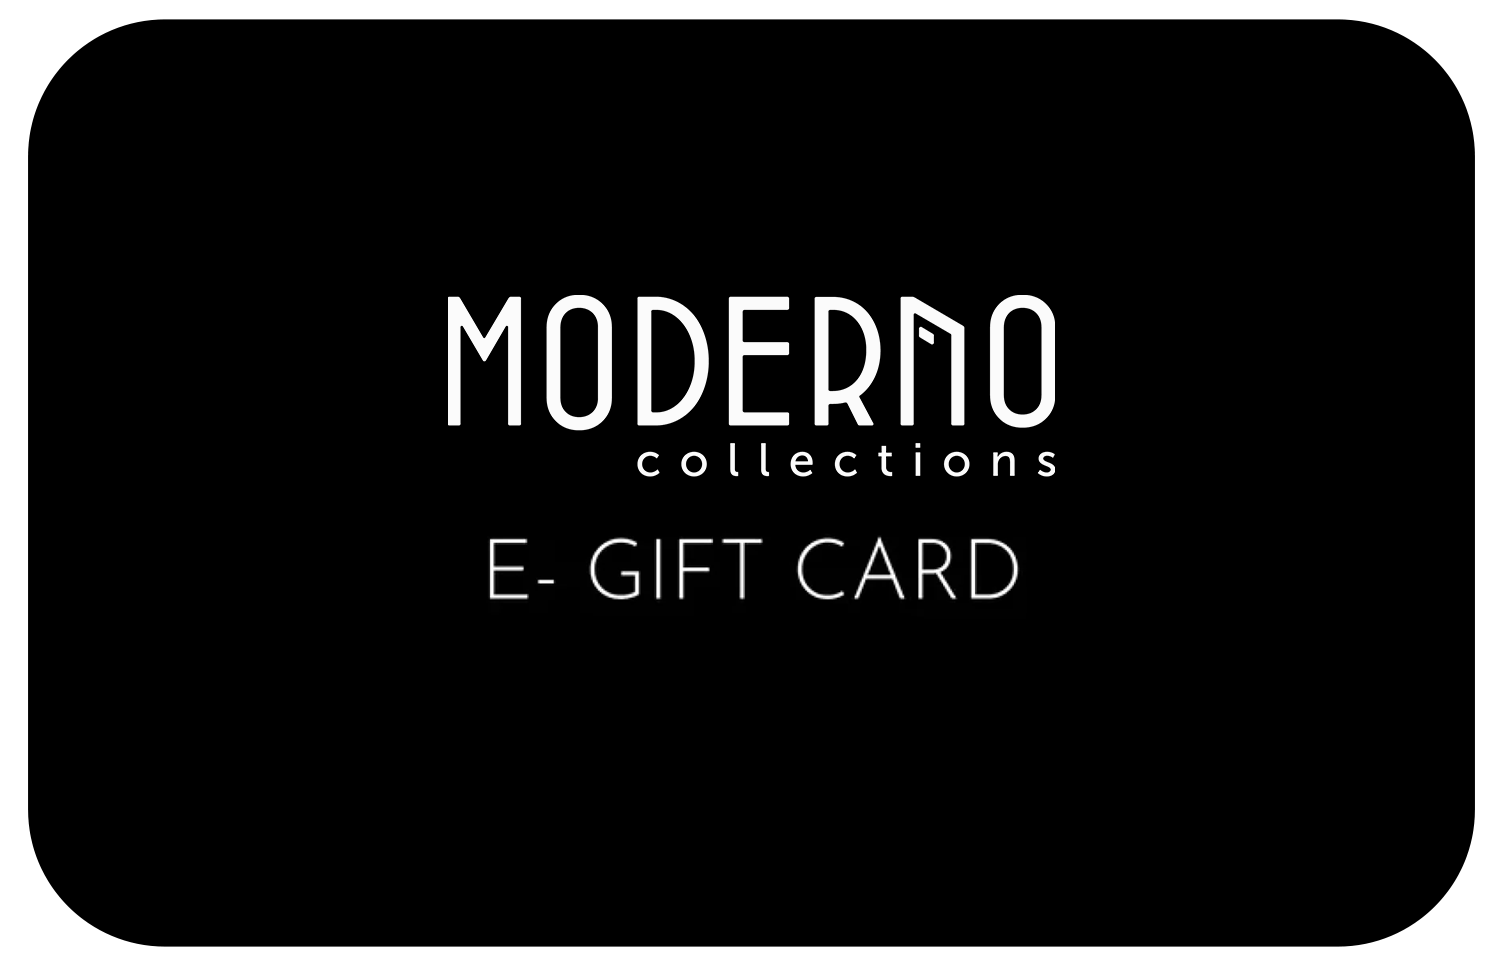 Moderno Gift Card - Moderno Collections